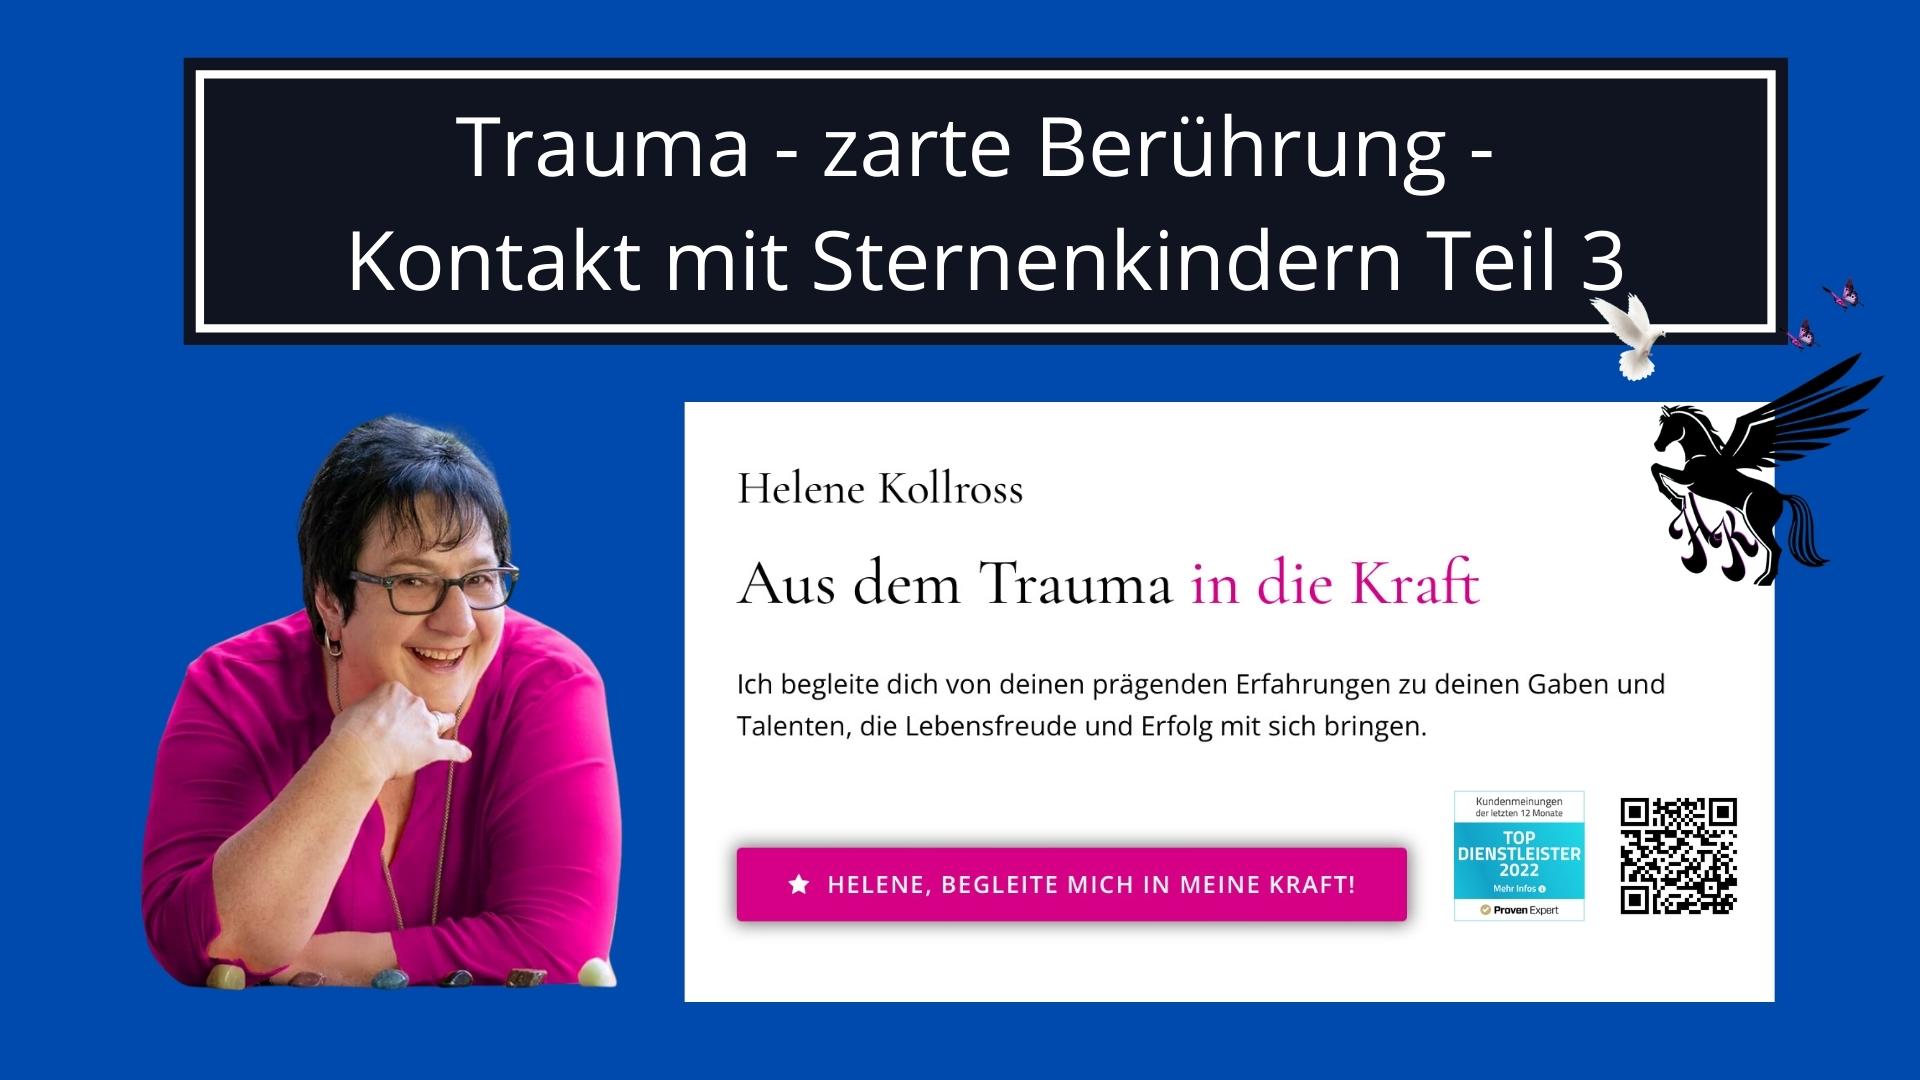 Trauma - zarte Berührung - Kontakt mit Sternenkindern Teil 3 Trauma & Mindset Mentor - Coach Repair Energetics Kollross Helene